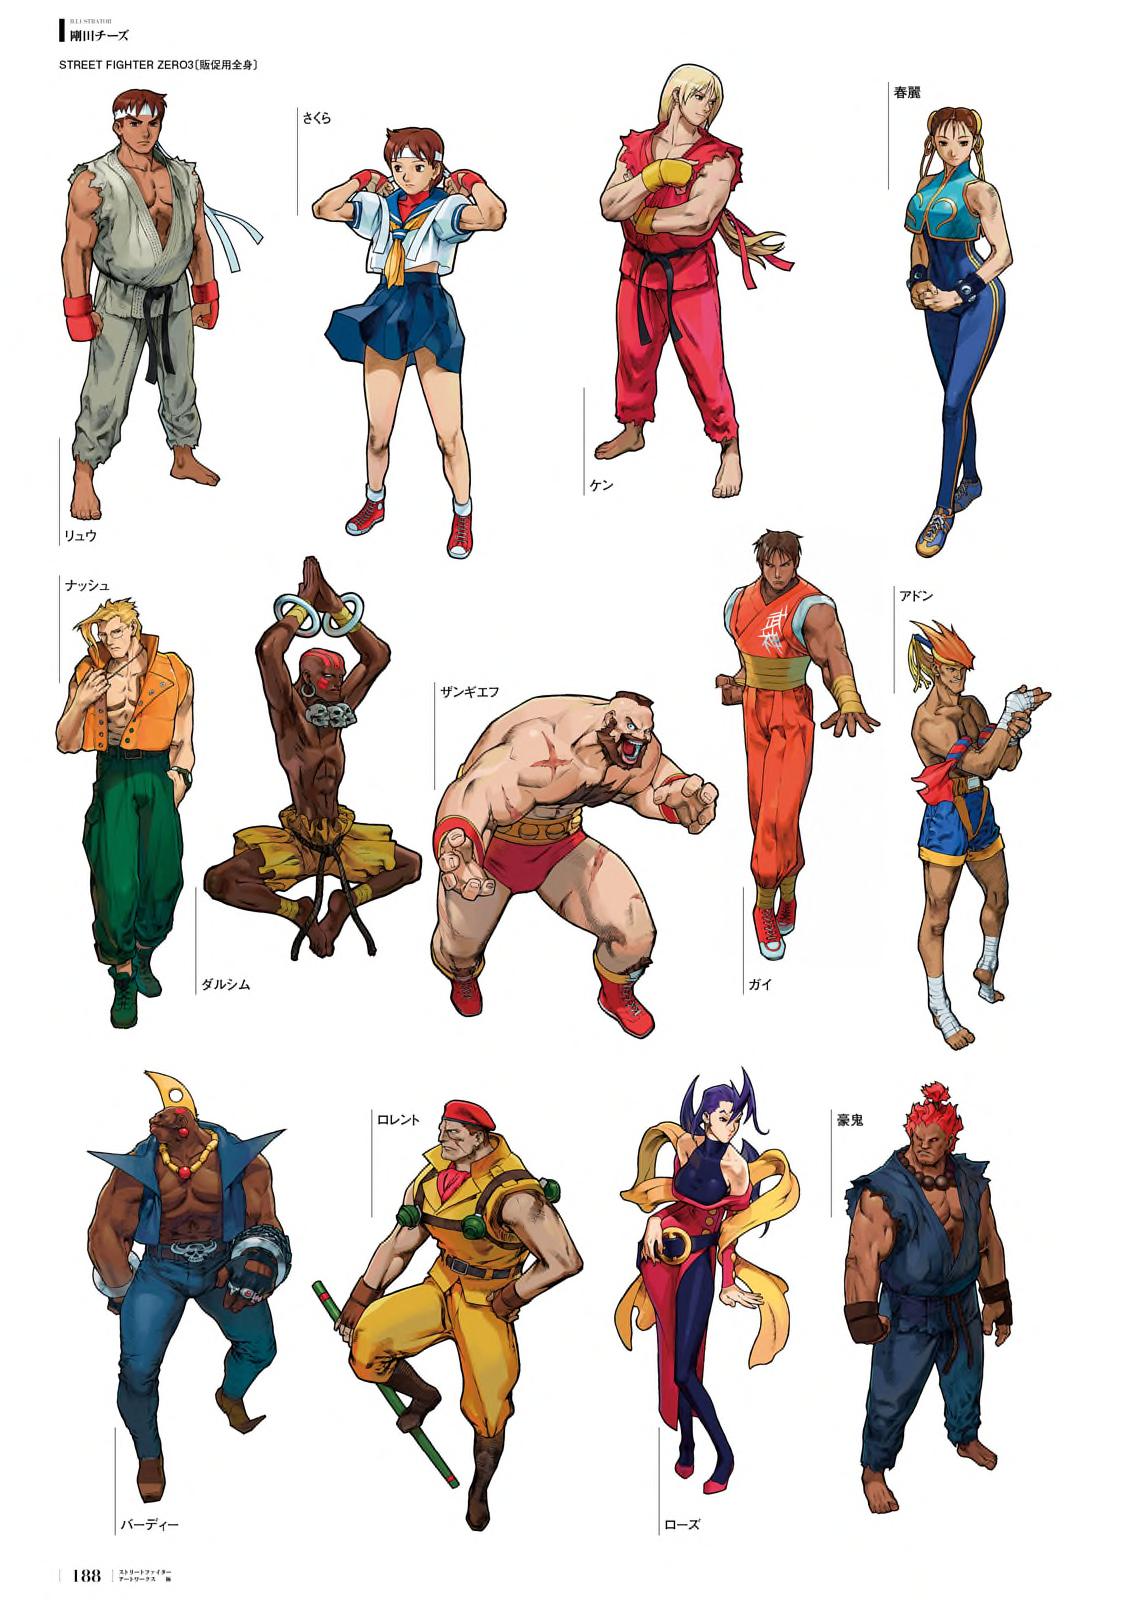 NBA Jam (the book) on X: 1998 ending art for Street Fighter Alpha 3, ft.  Vega and Cammy.  / X